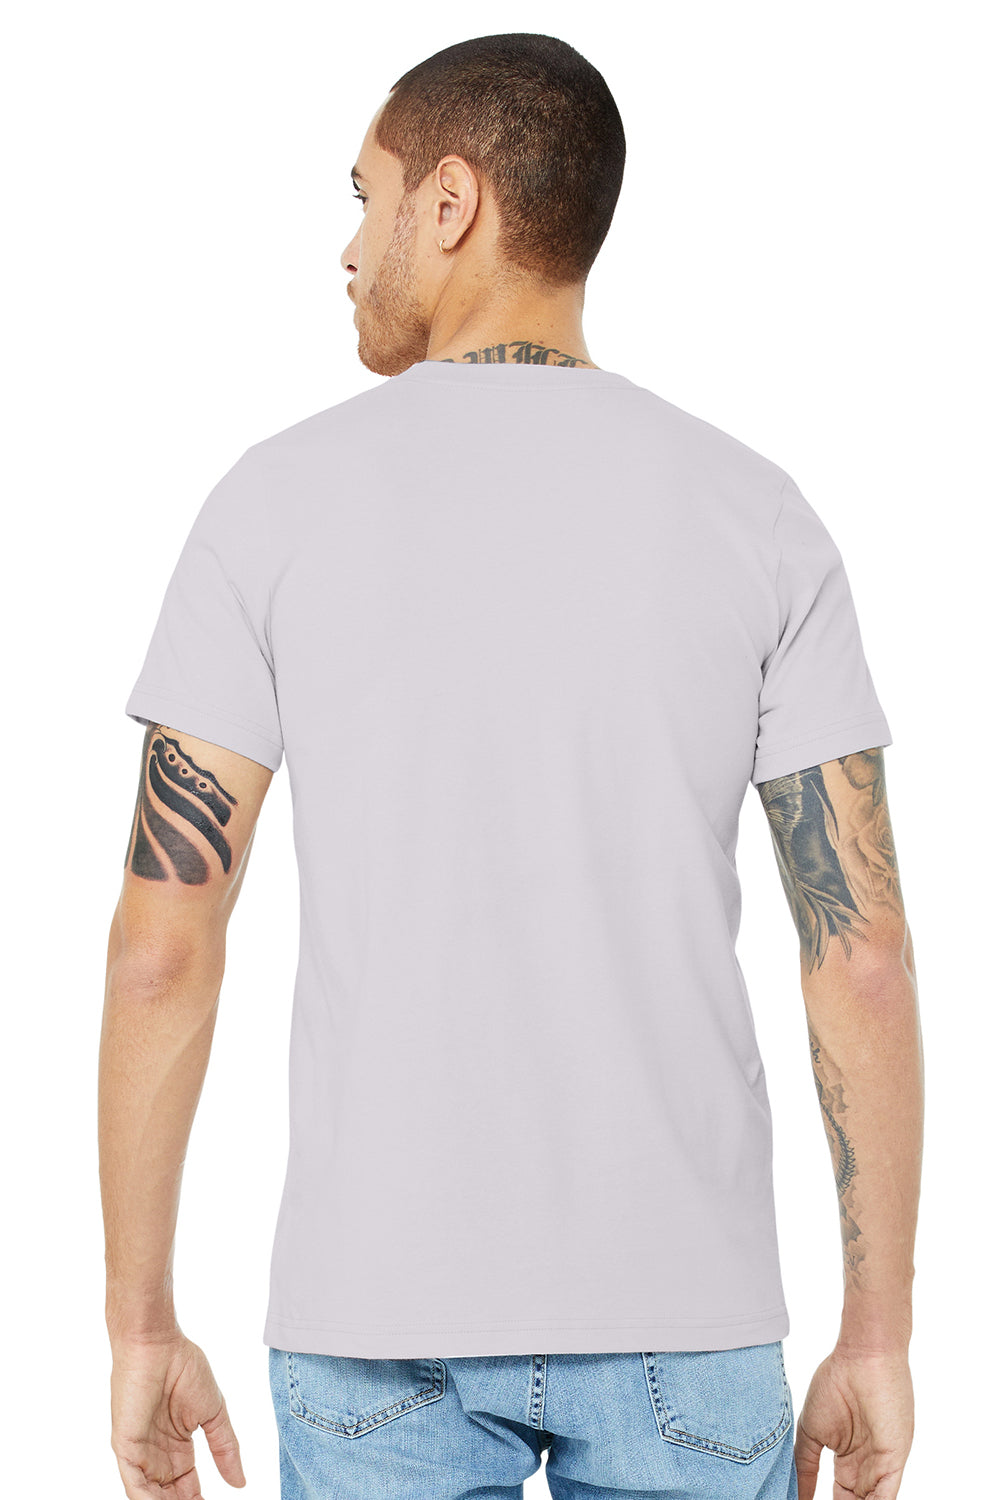 Bella + Canvas BC3001/3001C Mens Jersey Short Sleeve Crewneck T-Shirt Lavender Dust Model Back